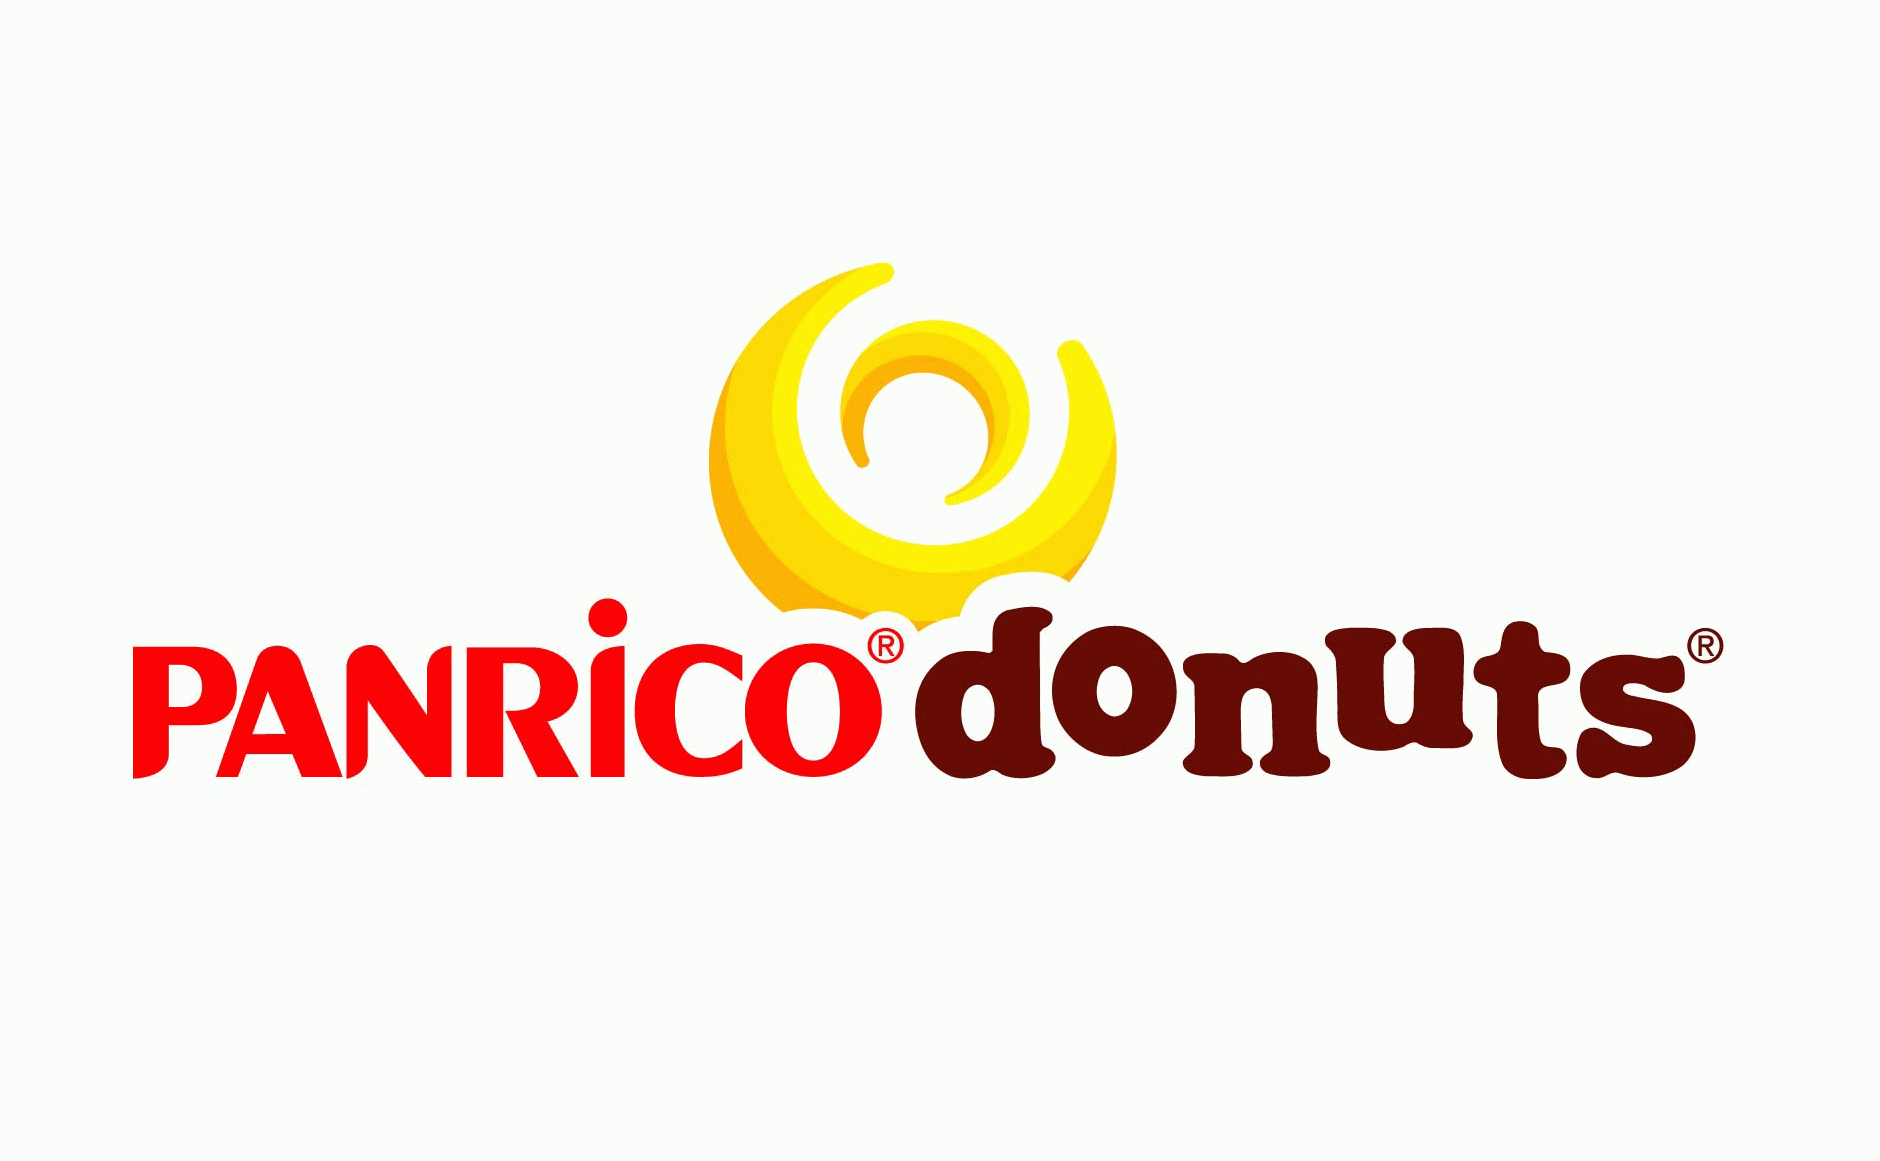 panrico donuts Logo photo - 1